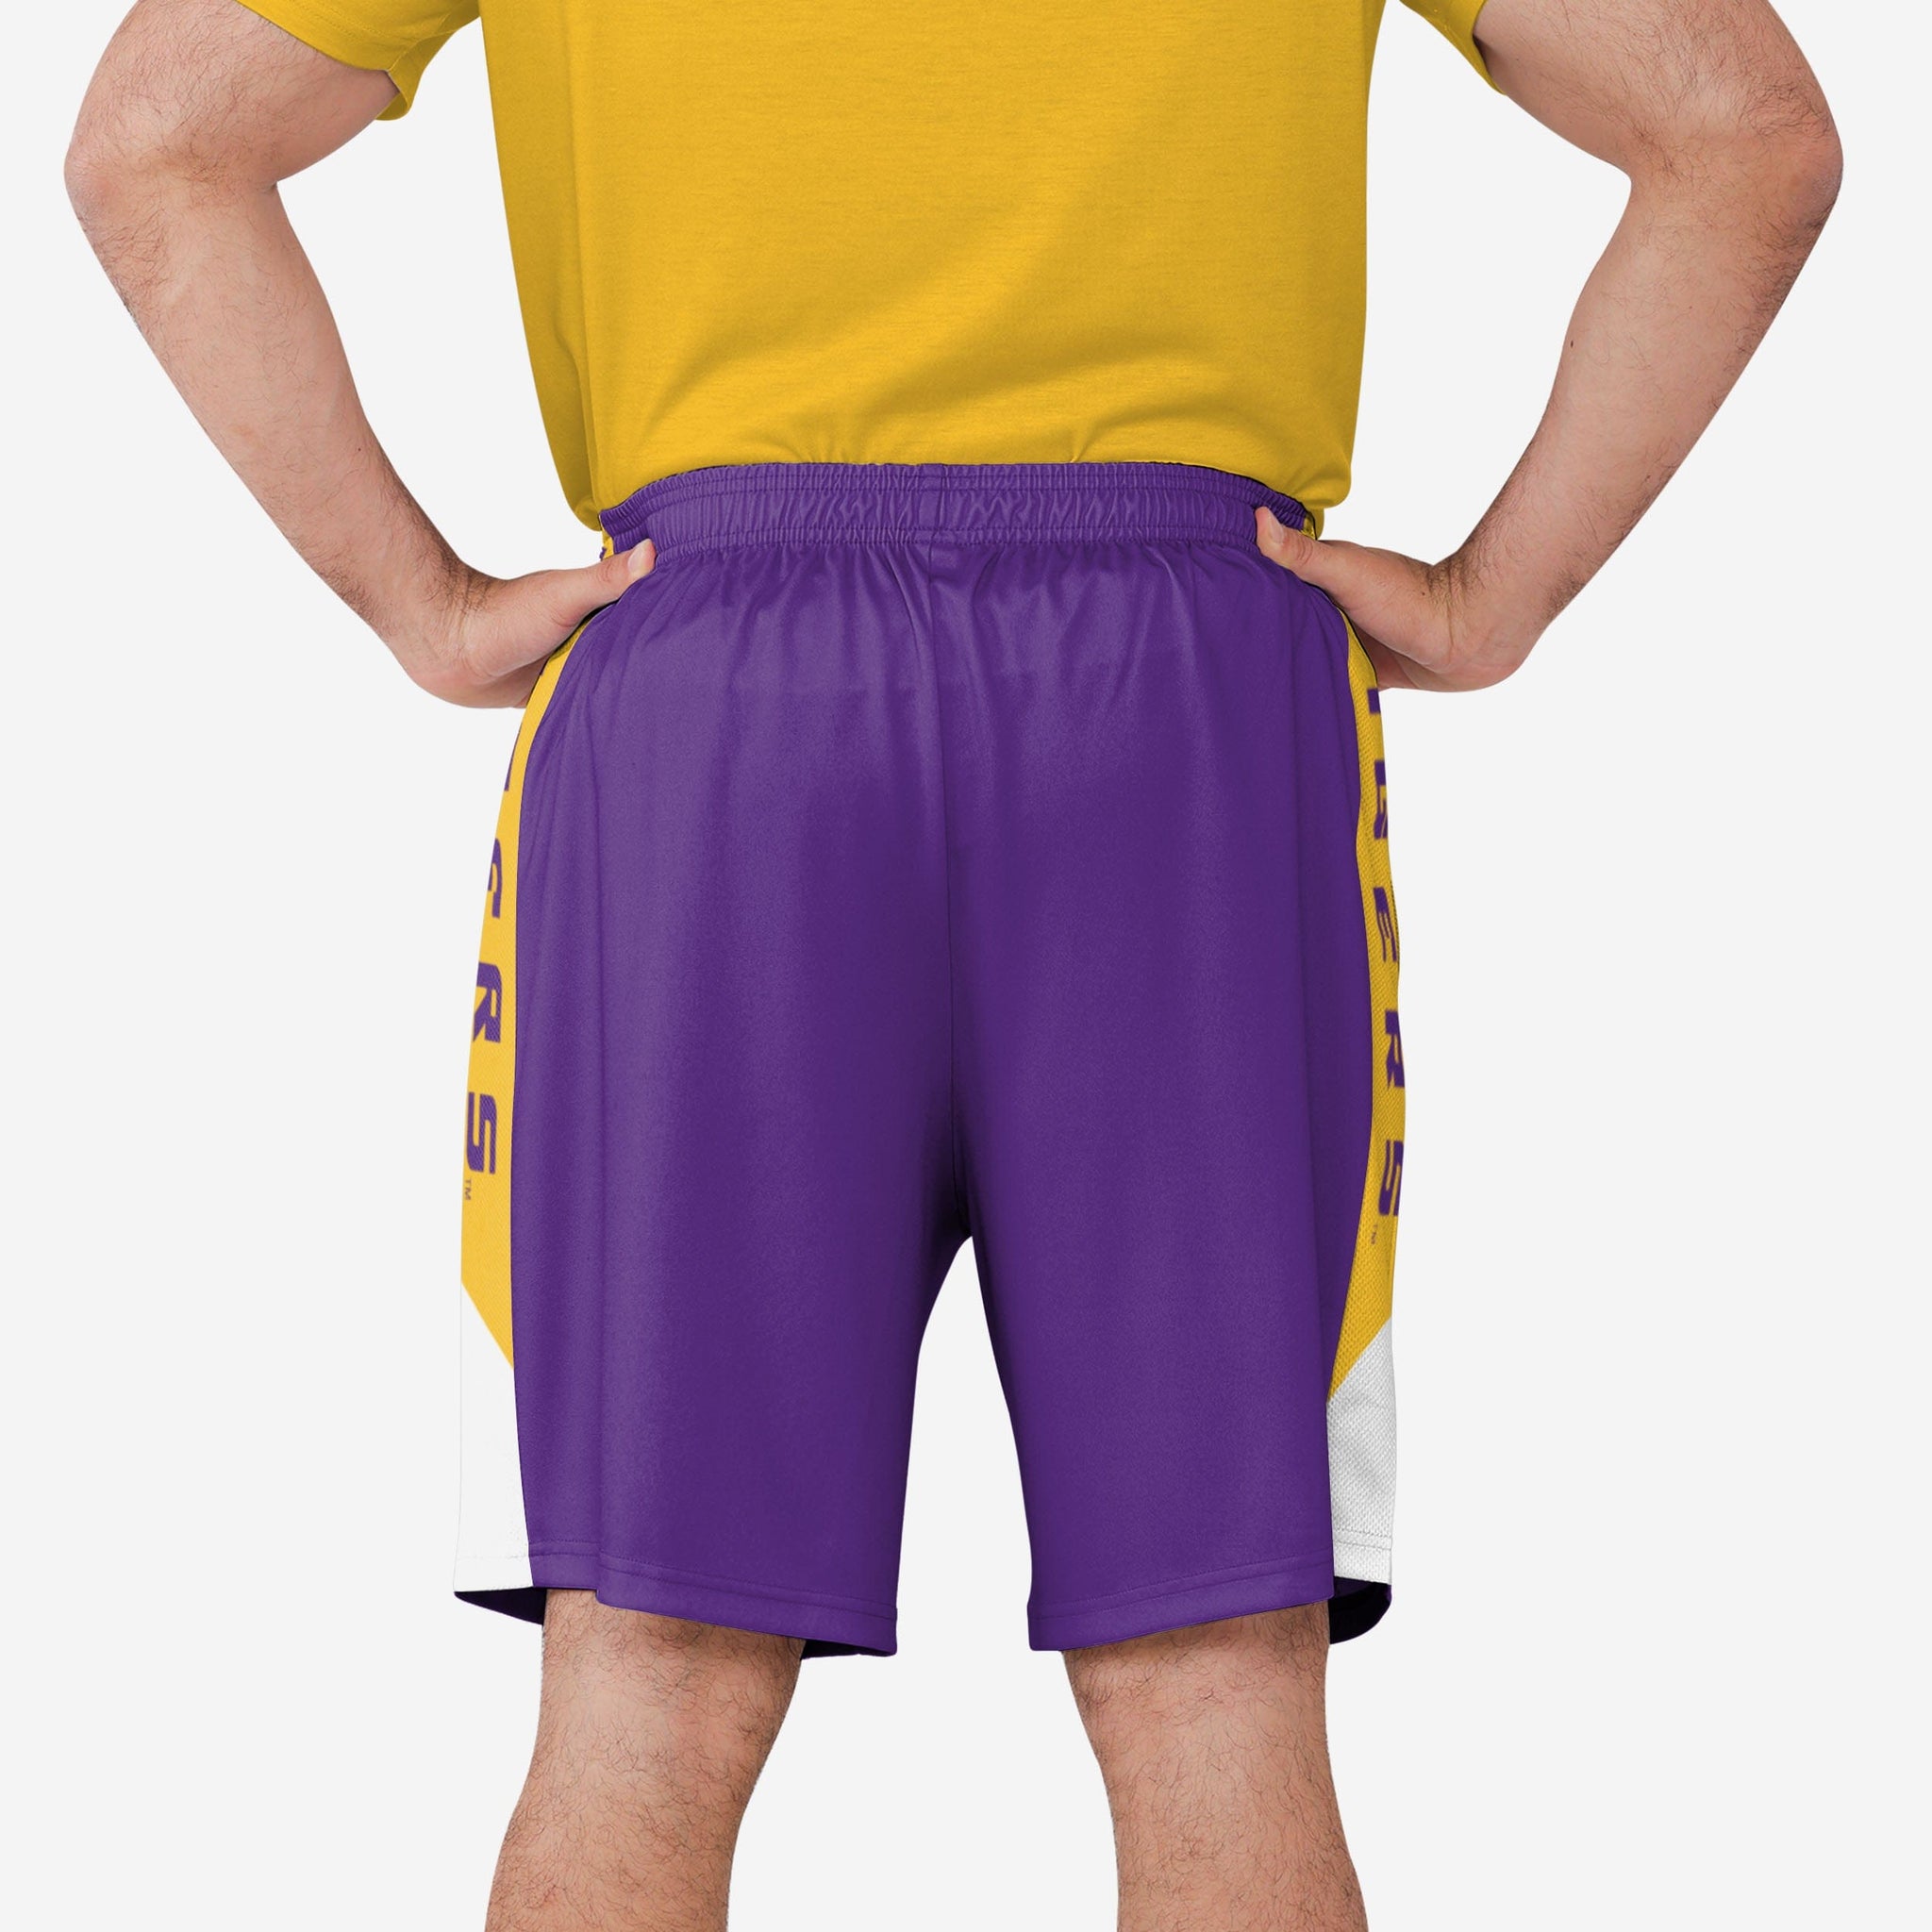  MITCHELL & NESS NBA Big FACE Fashion Shorts 5.0 Toronto Raptors  (M) Purple/Red : Sports & Outdoors